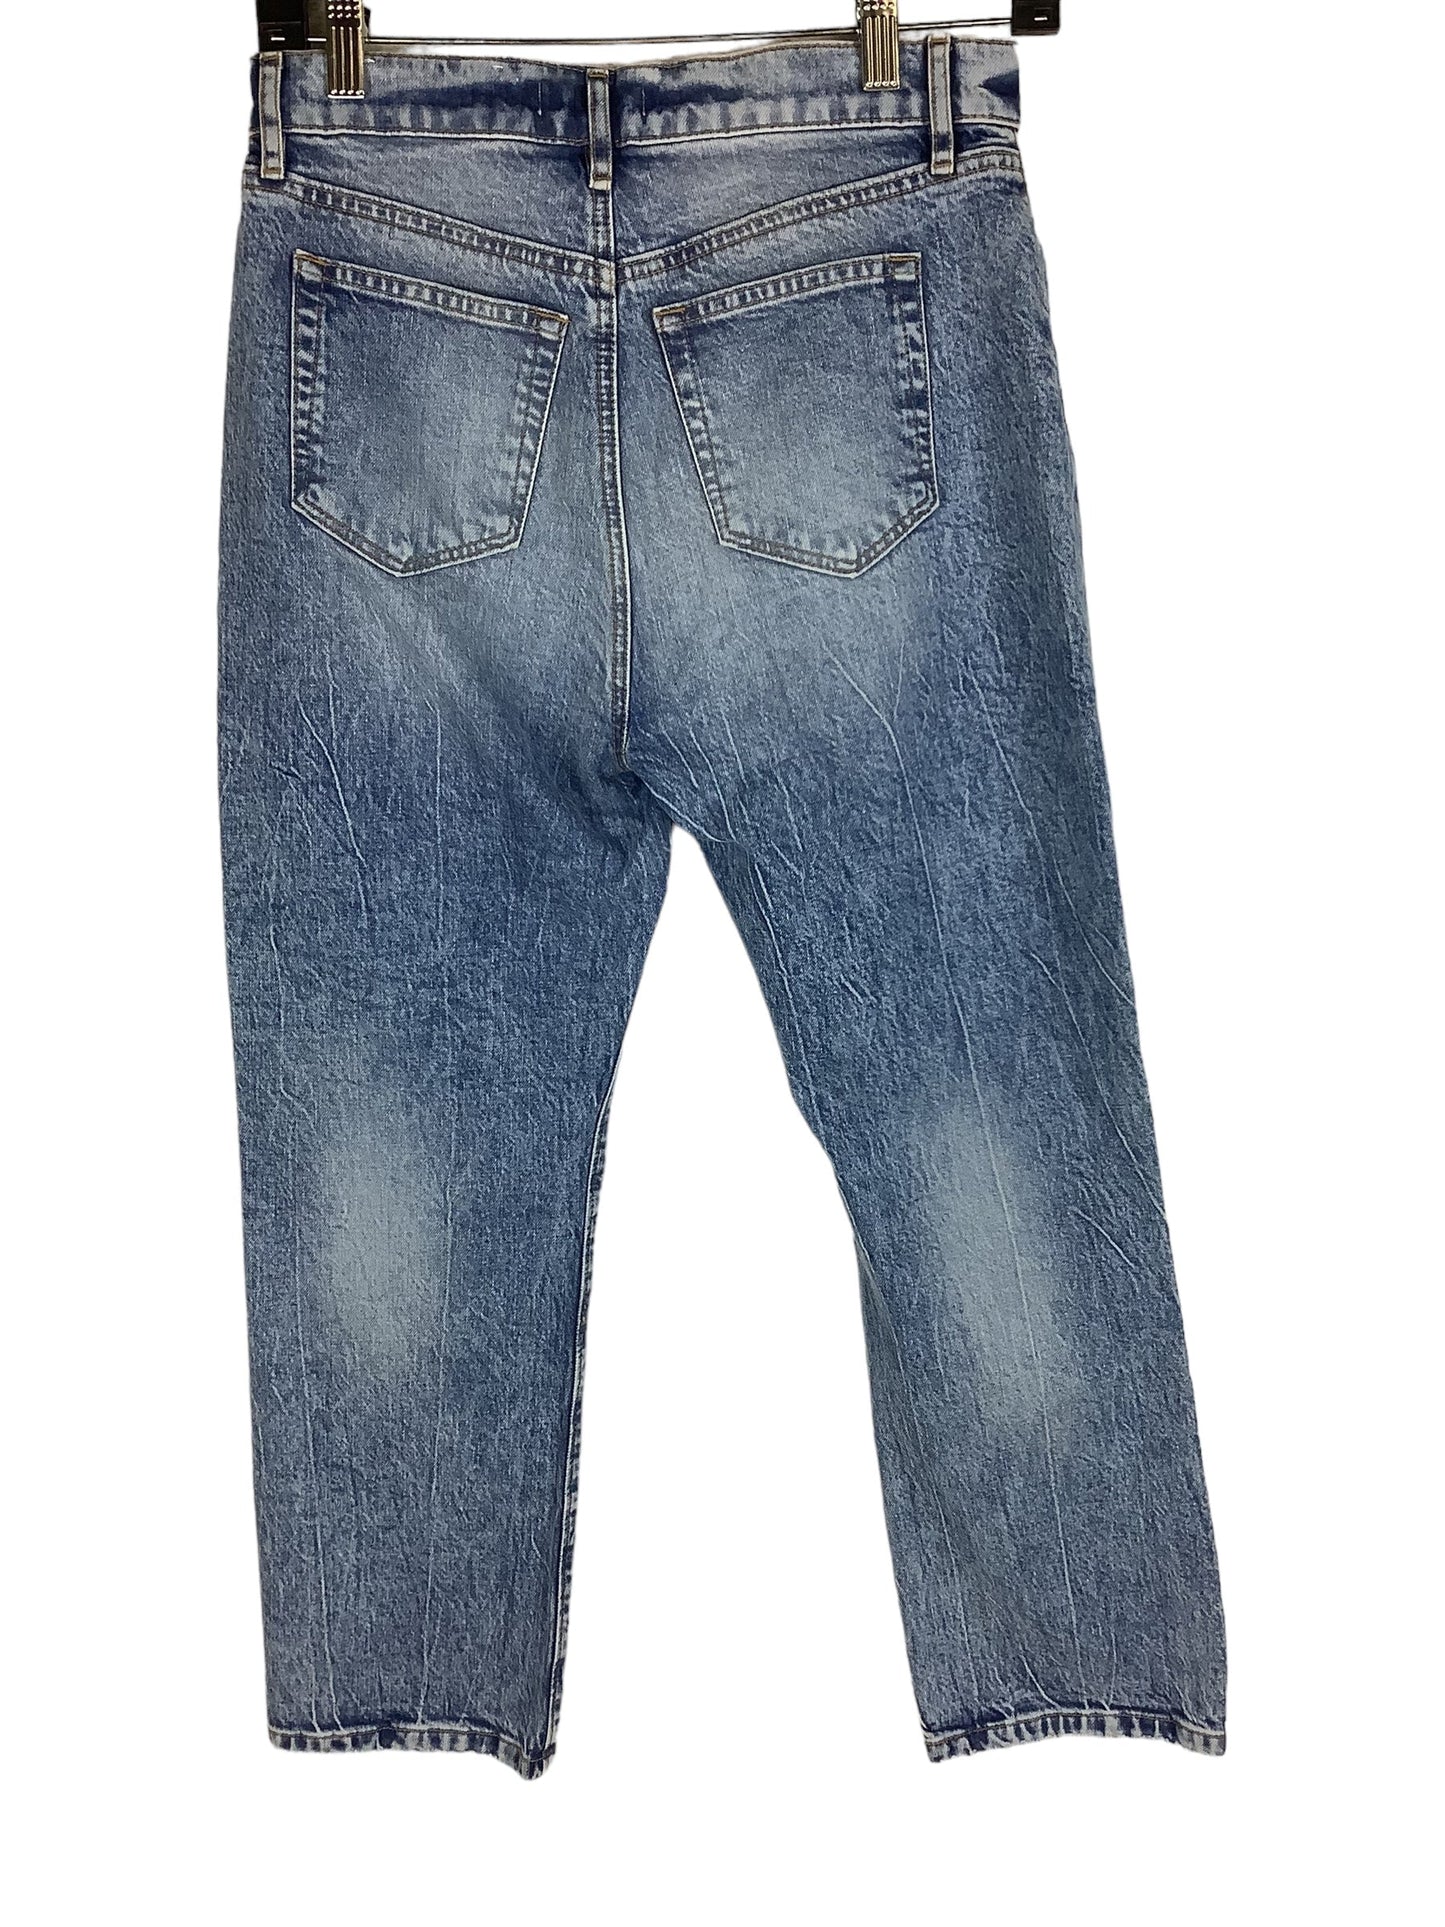 Blue Denim Jeans Straight Loft, Size 0